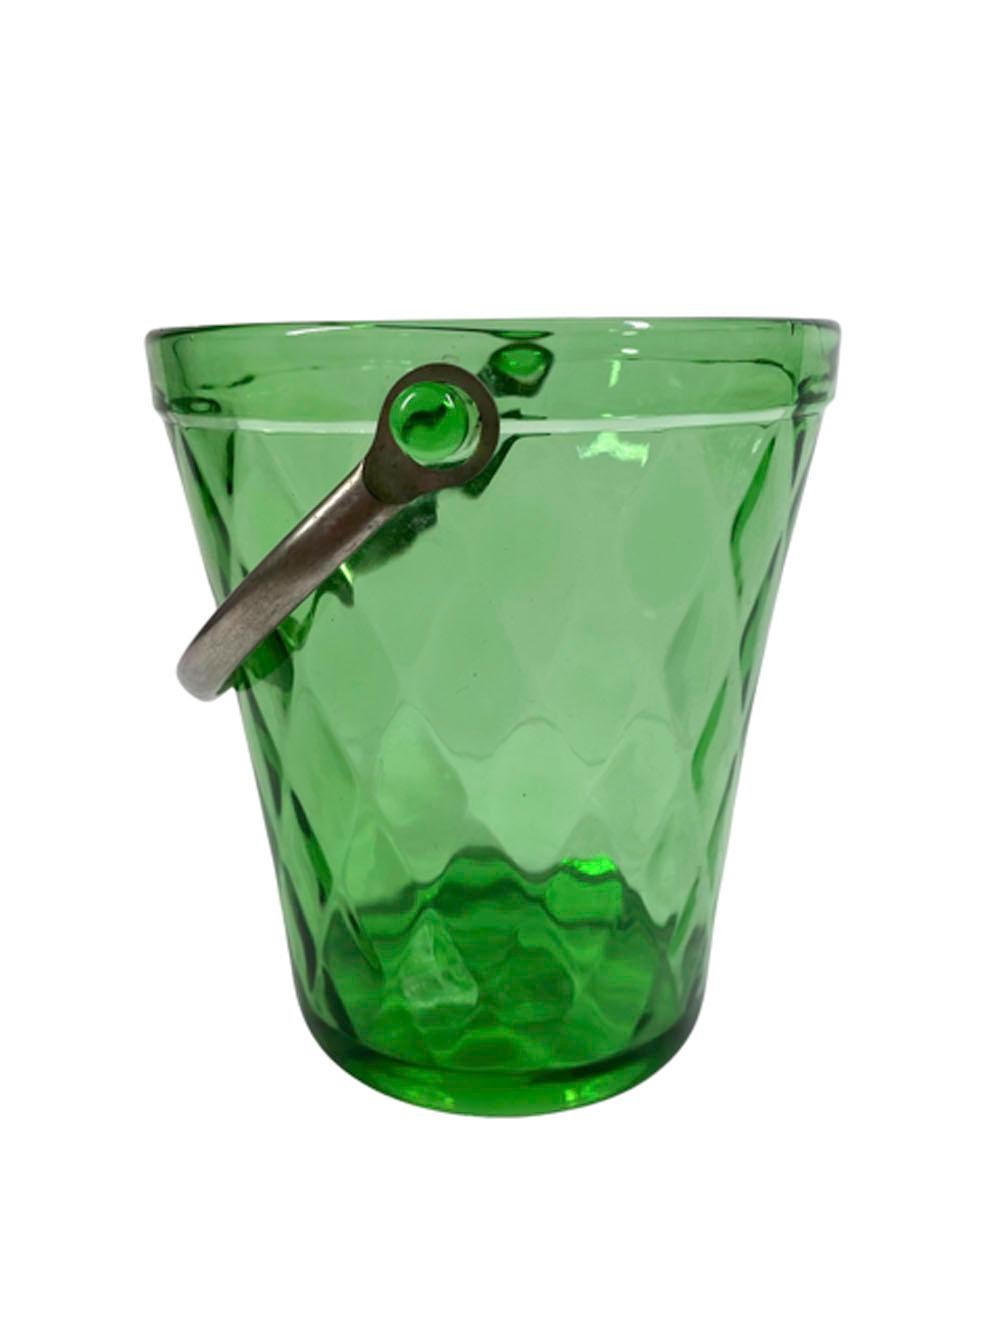 green depression glass ice bucket